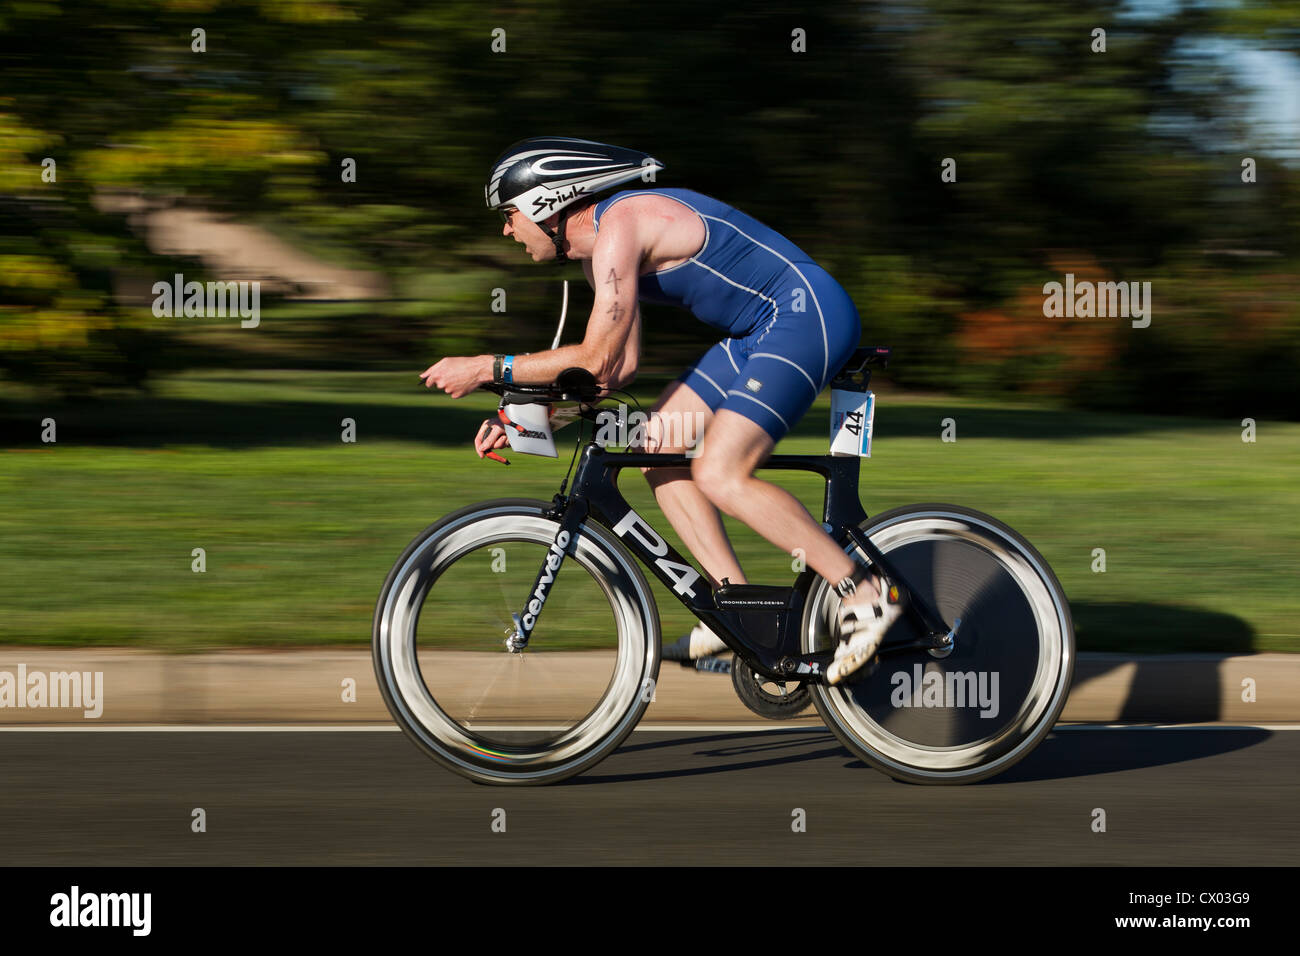 Radfahrer racing Bike Race - USA Stockfoto